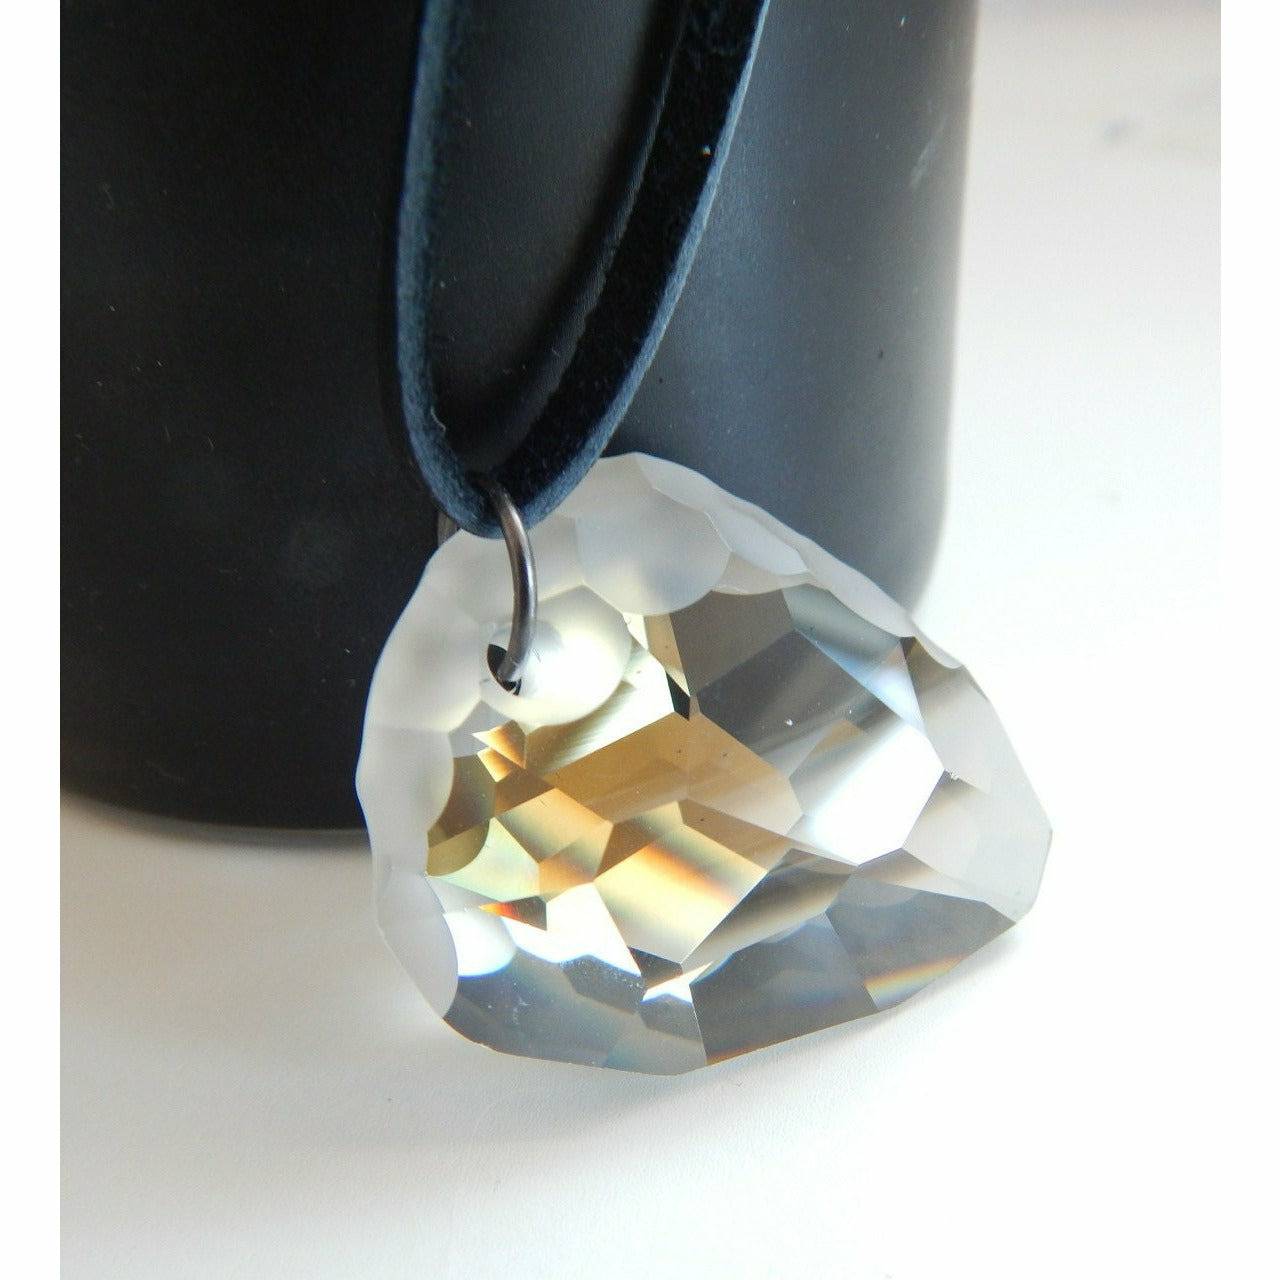 Rock crystal pendant on black leather necklace